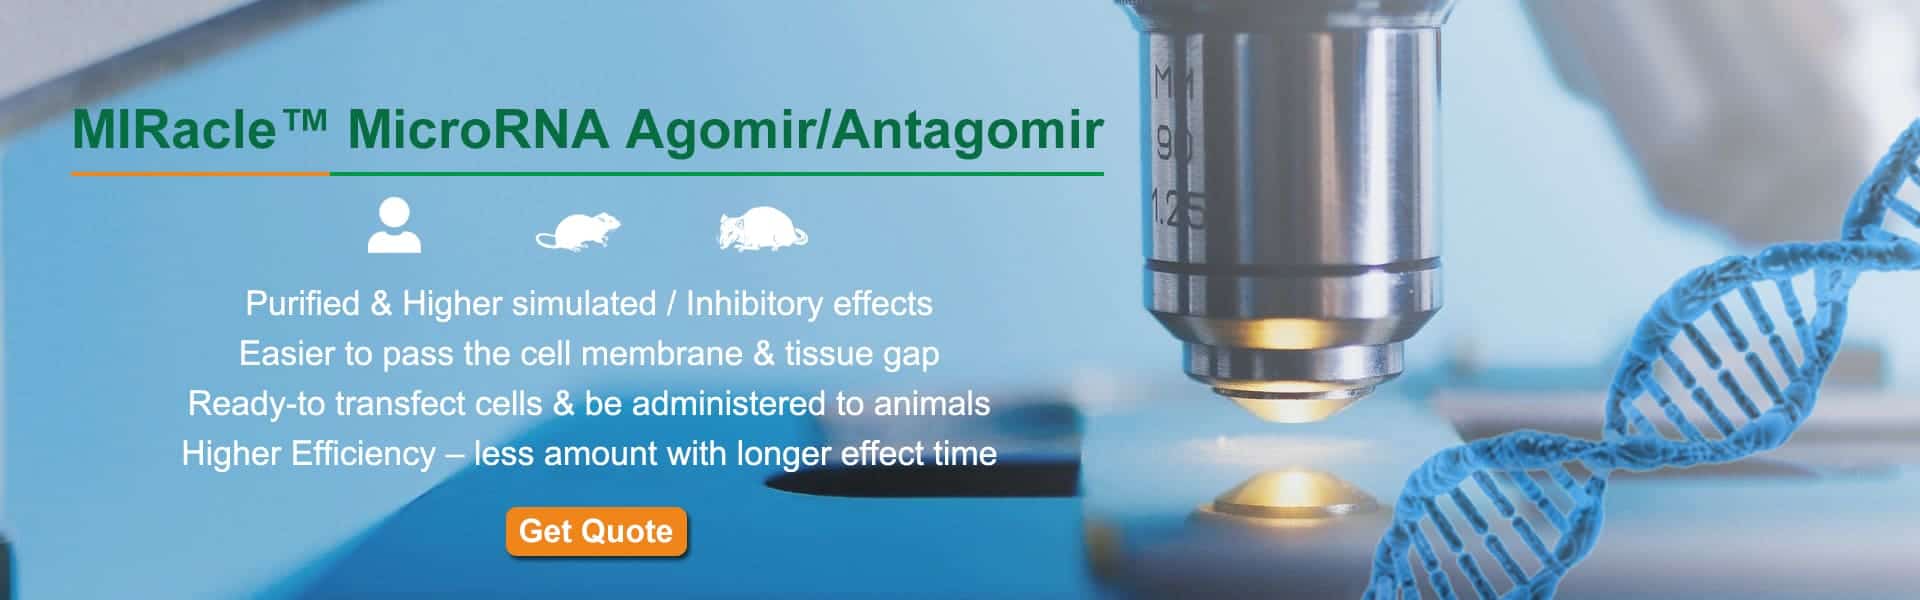 AcceGen - MicroRNA Agomir/Antagomir